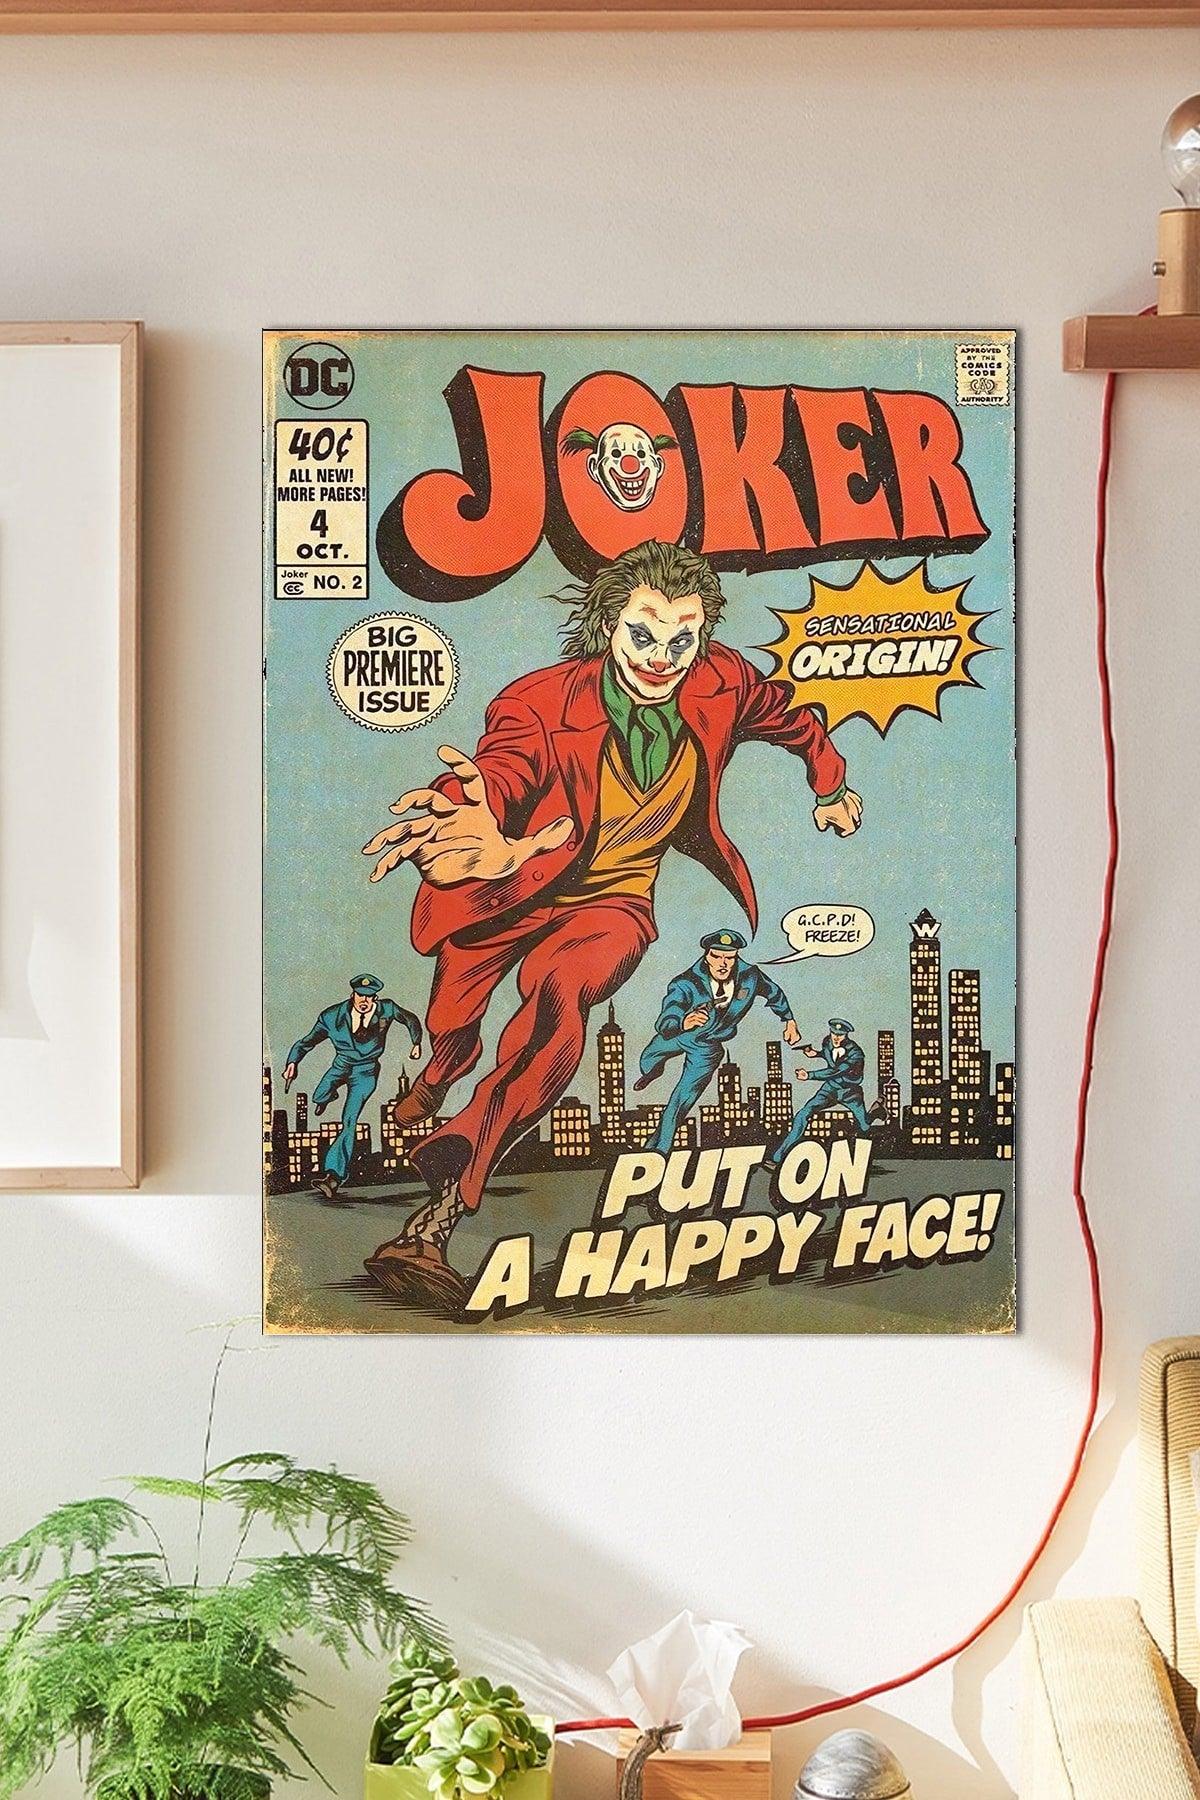 Joker Wall Poster Large 45x30 Cm - Swordslife